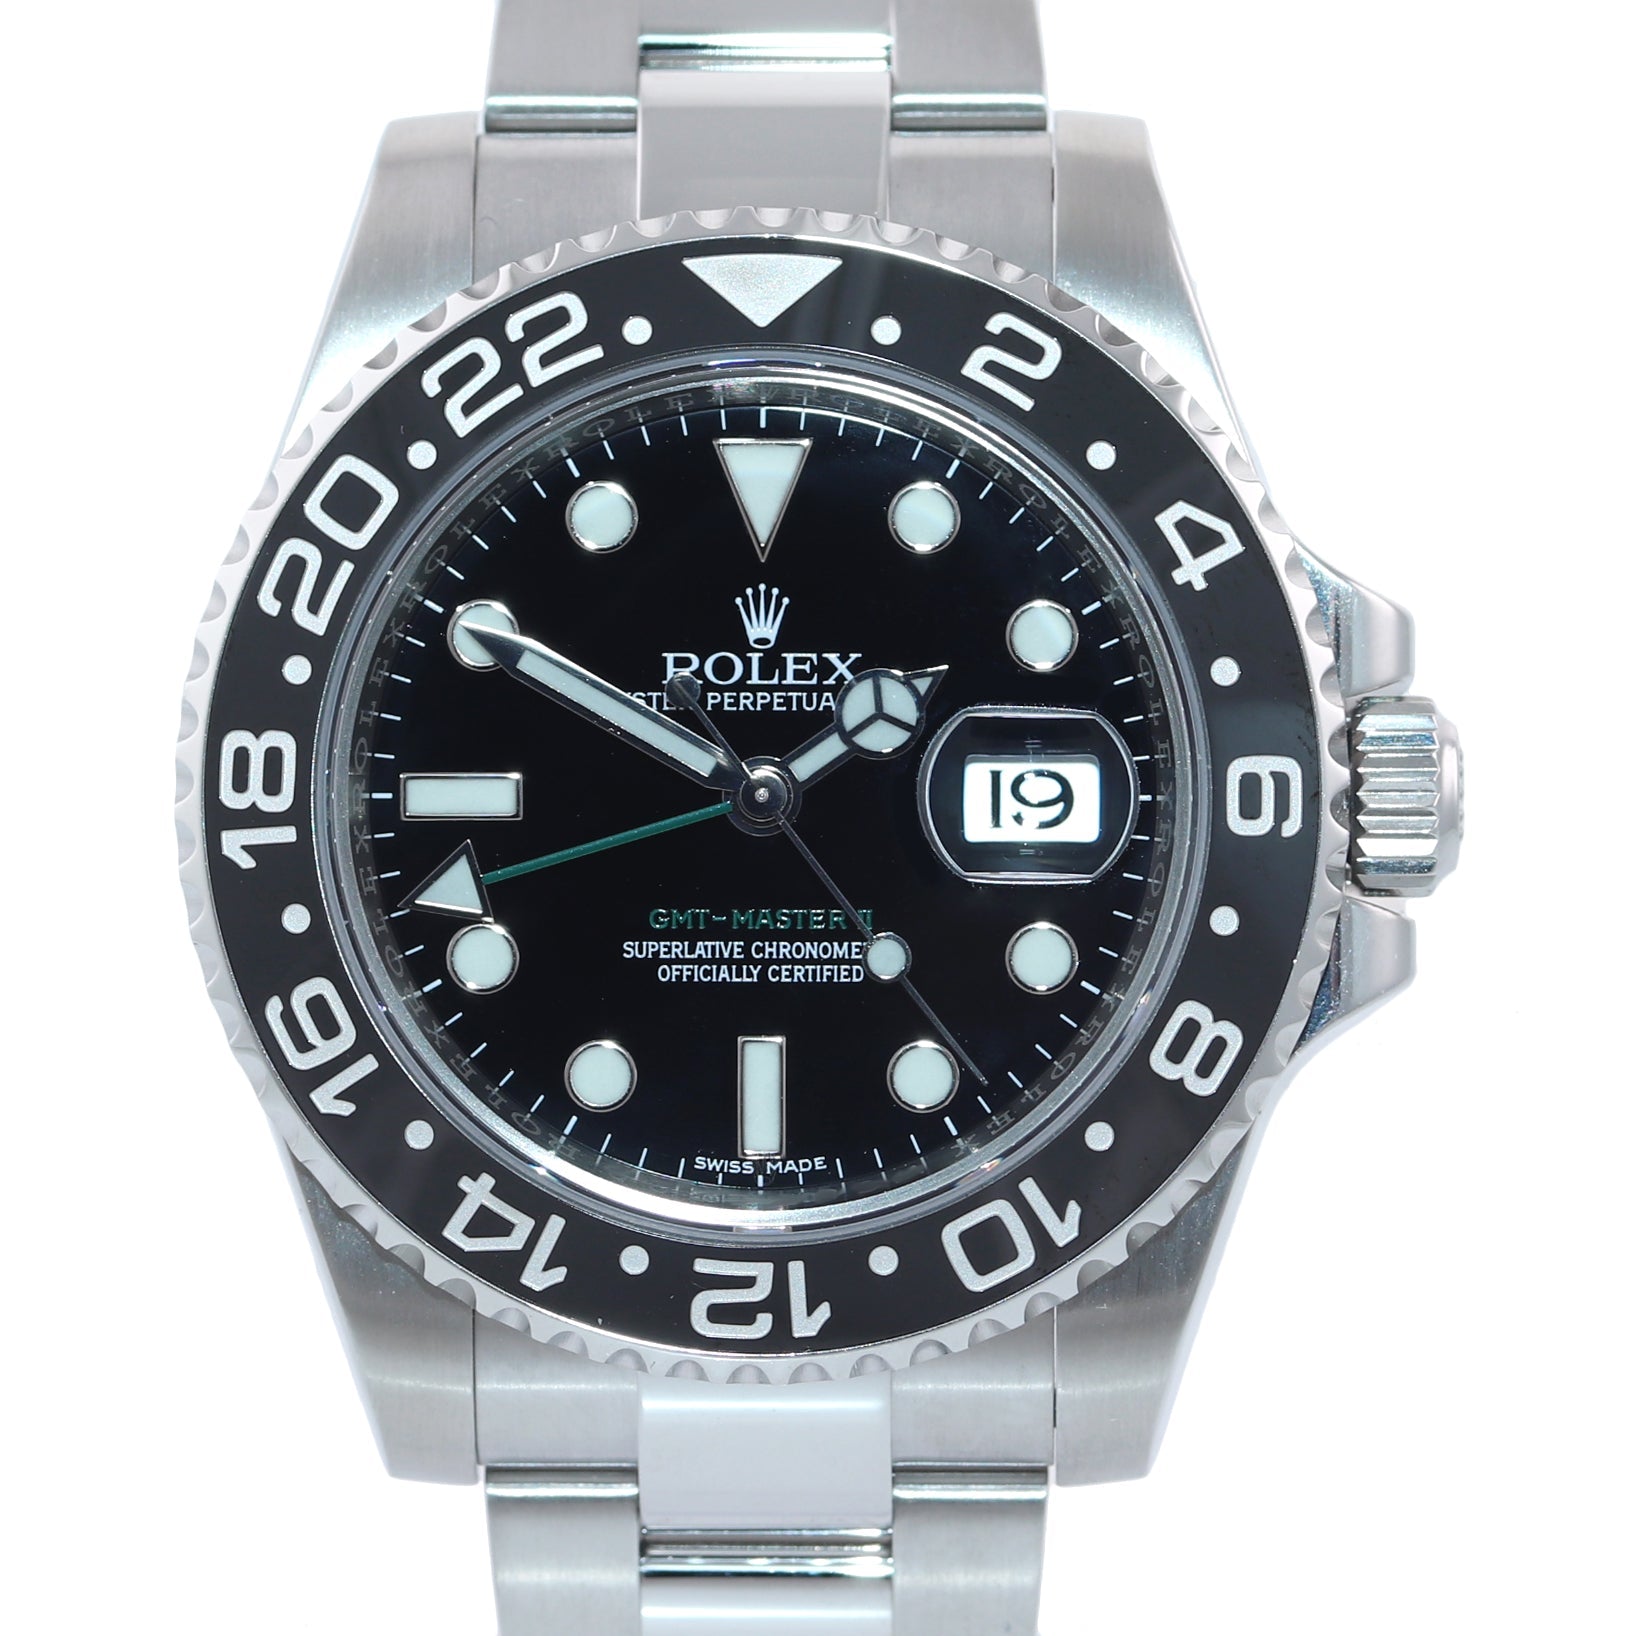 Random Serial Rolex GMT Master II 116710 Steel Ceramic Black Dial 40mm Watch Box